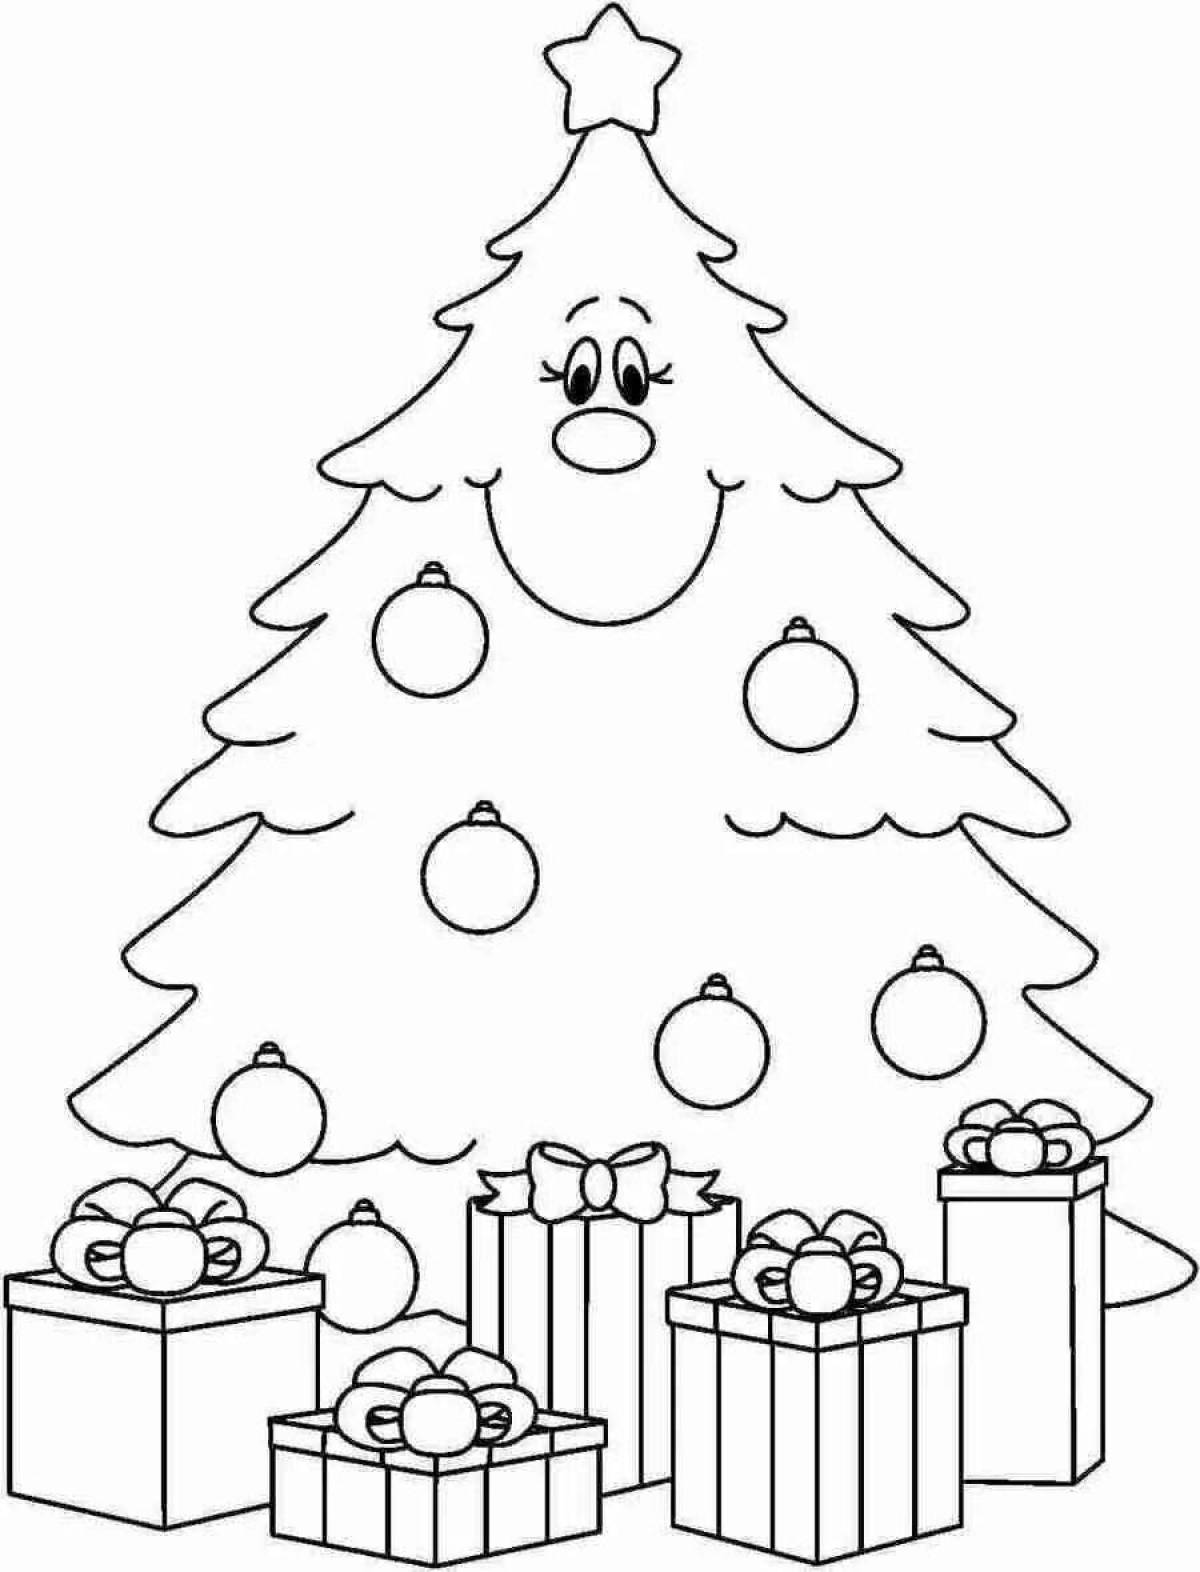 Shiny Christmas tree coloring book